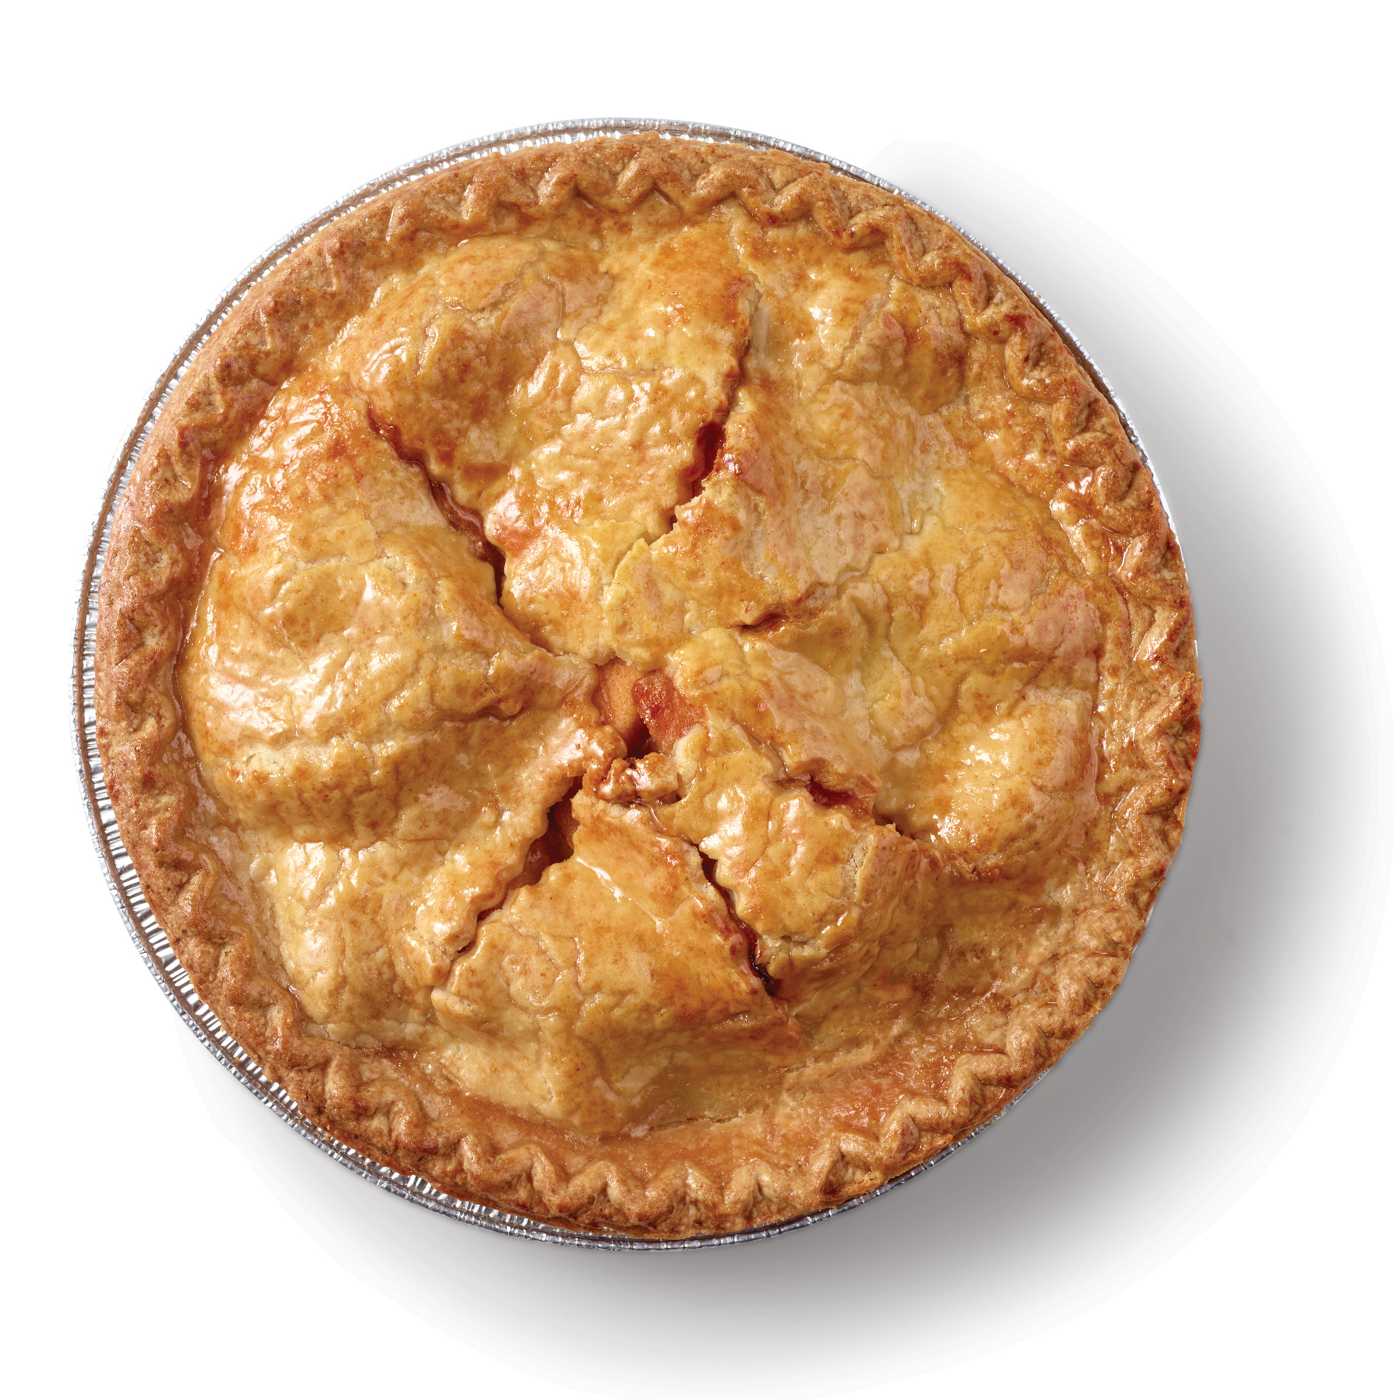 H-E-B Bakery Cinnamon Apple Pie; image 1 of 2